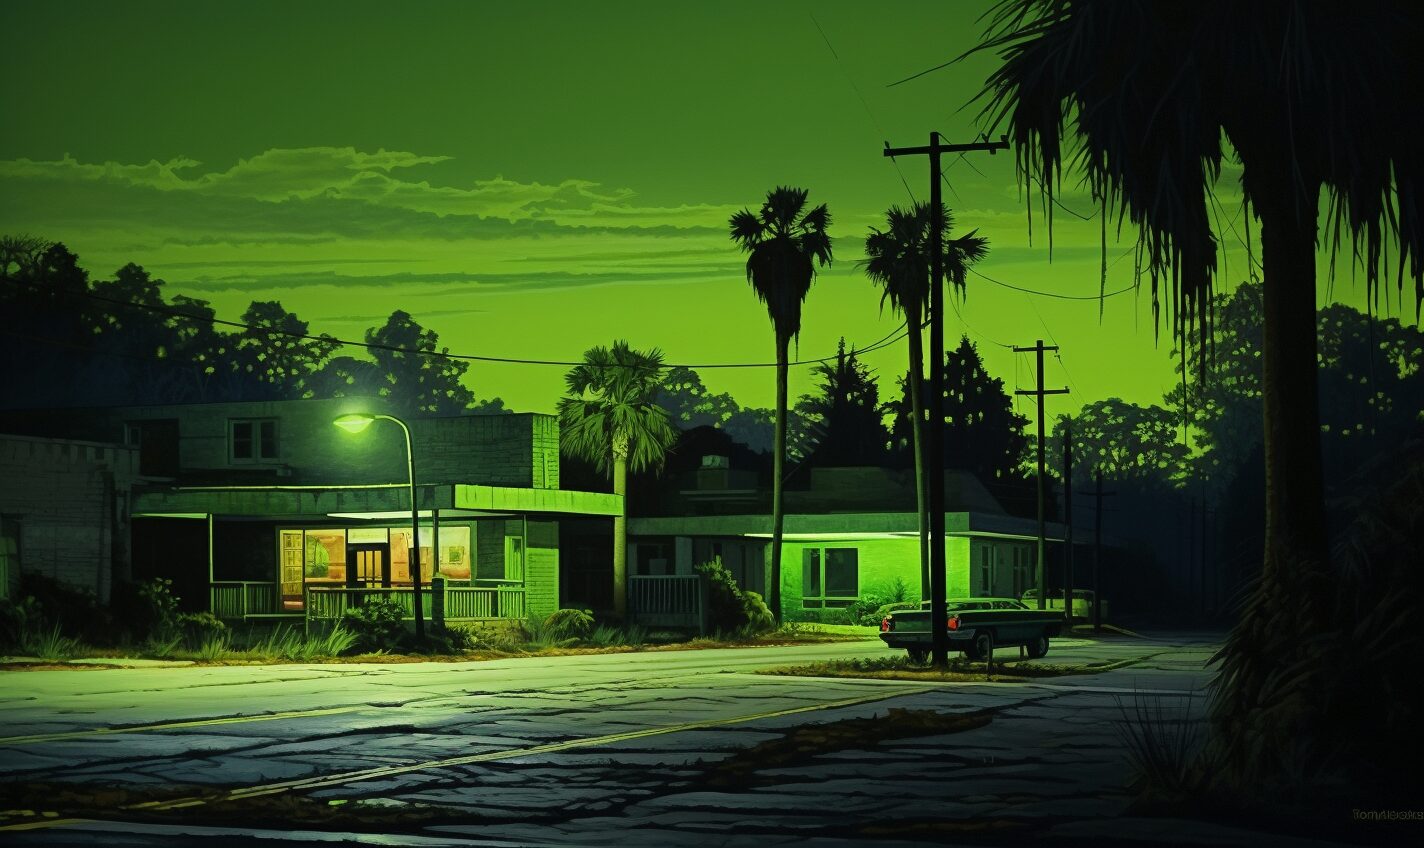 charleston, south carolina in a black and neon green glow